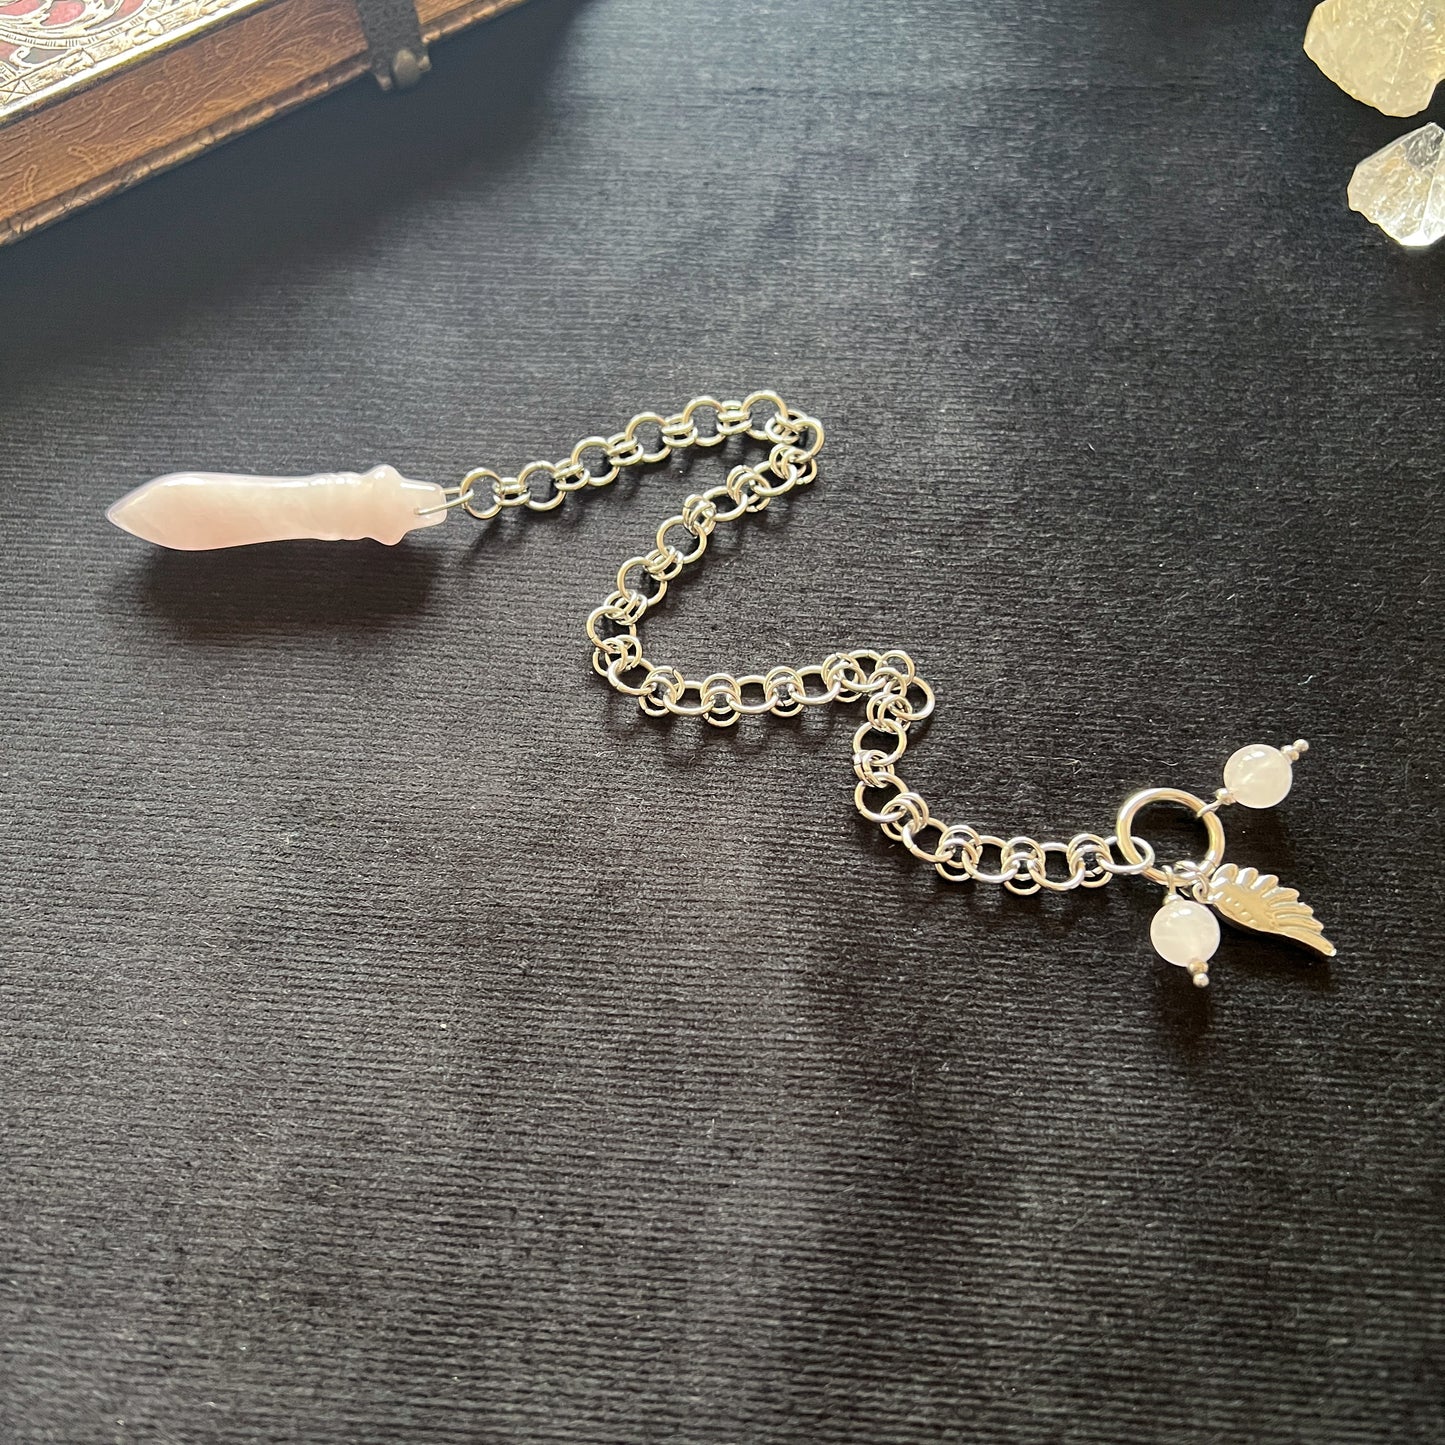 Egyptian divination pendulum Thot rose quartz pendulum chainmail and wing charm dowsing pendulum